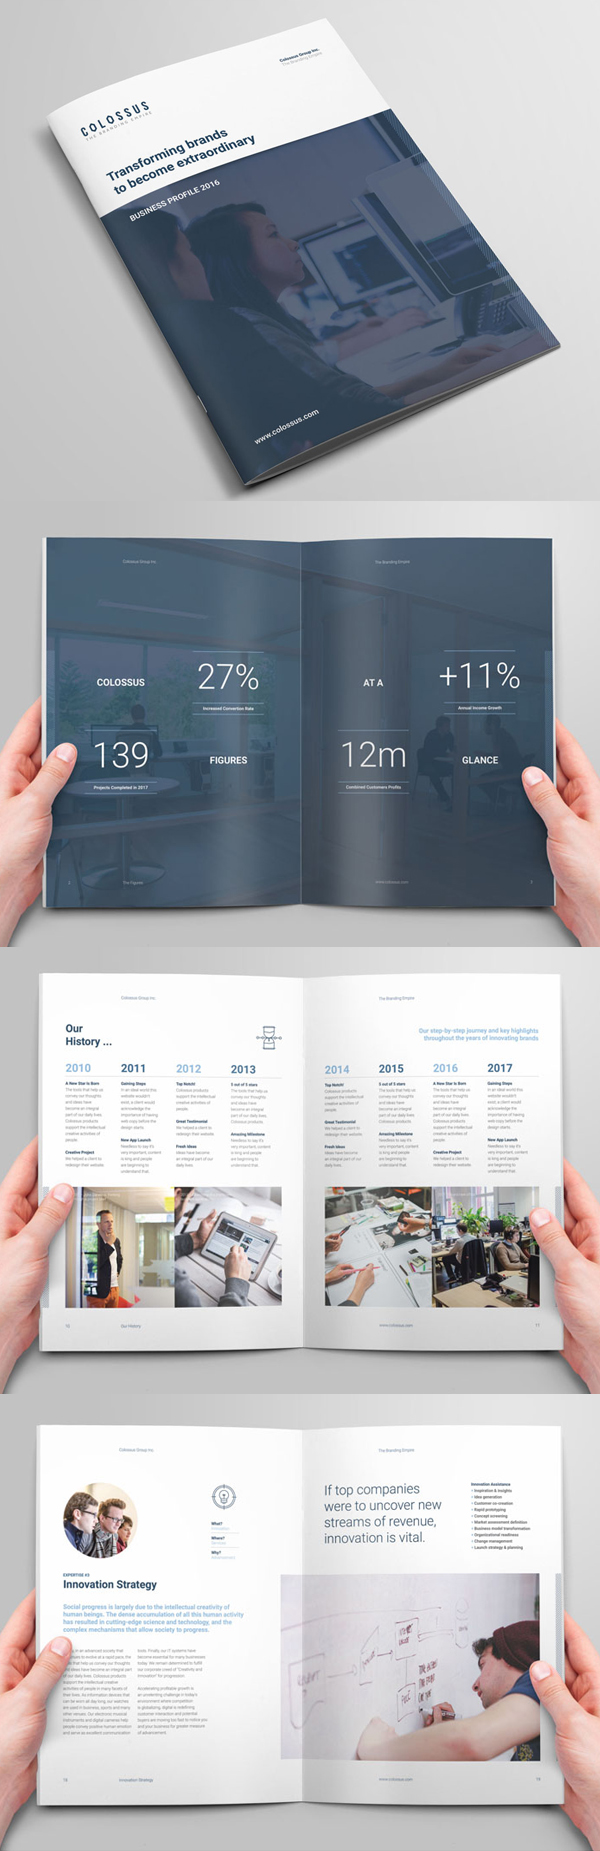 100 Professional Corporate Brochure Templates - 16